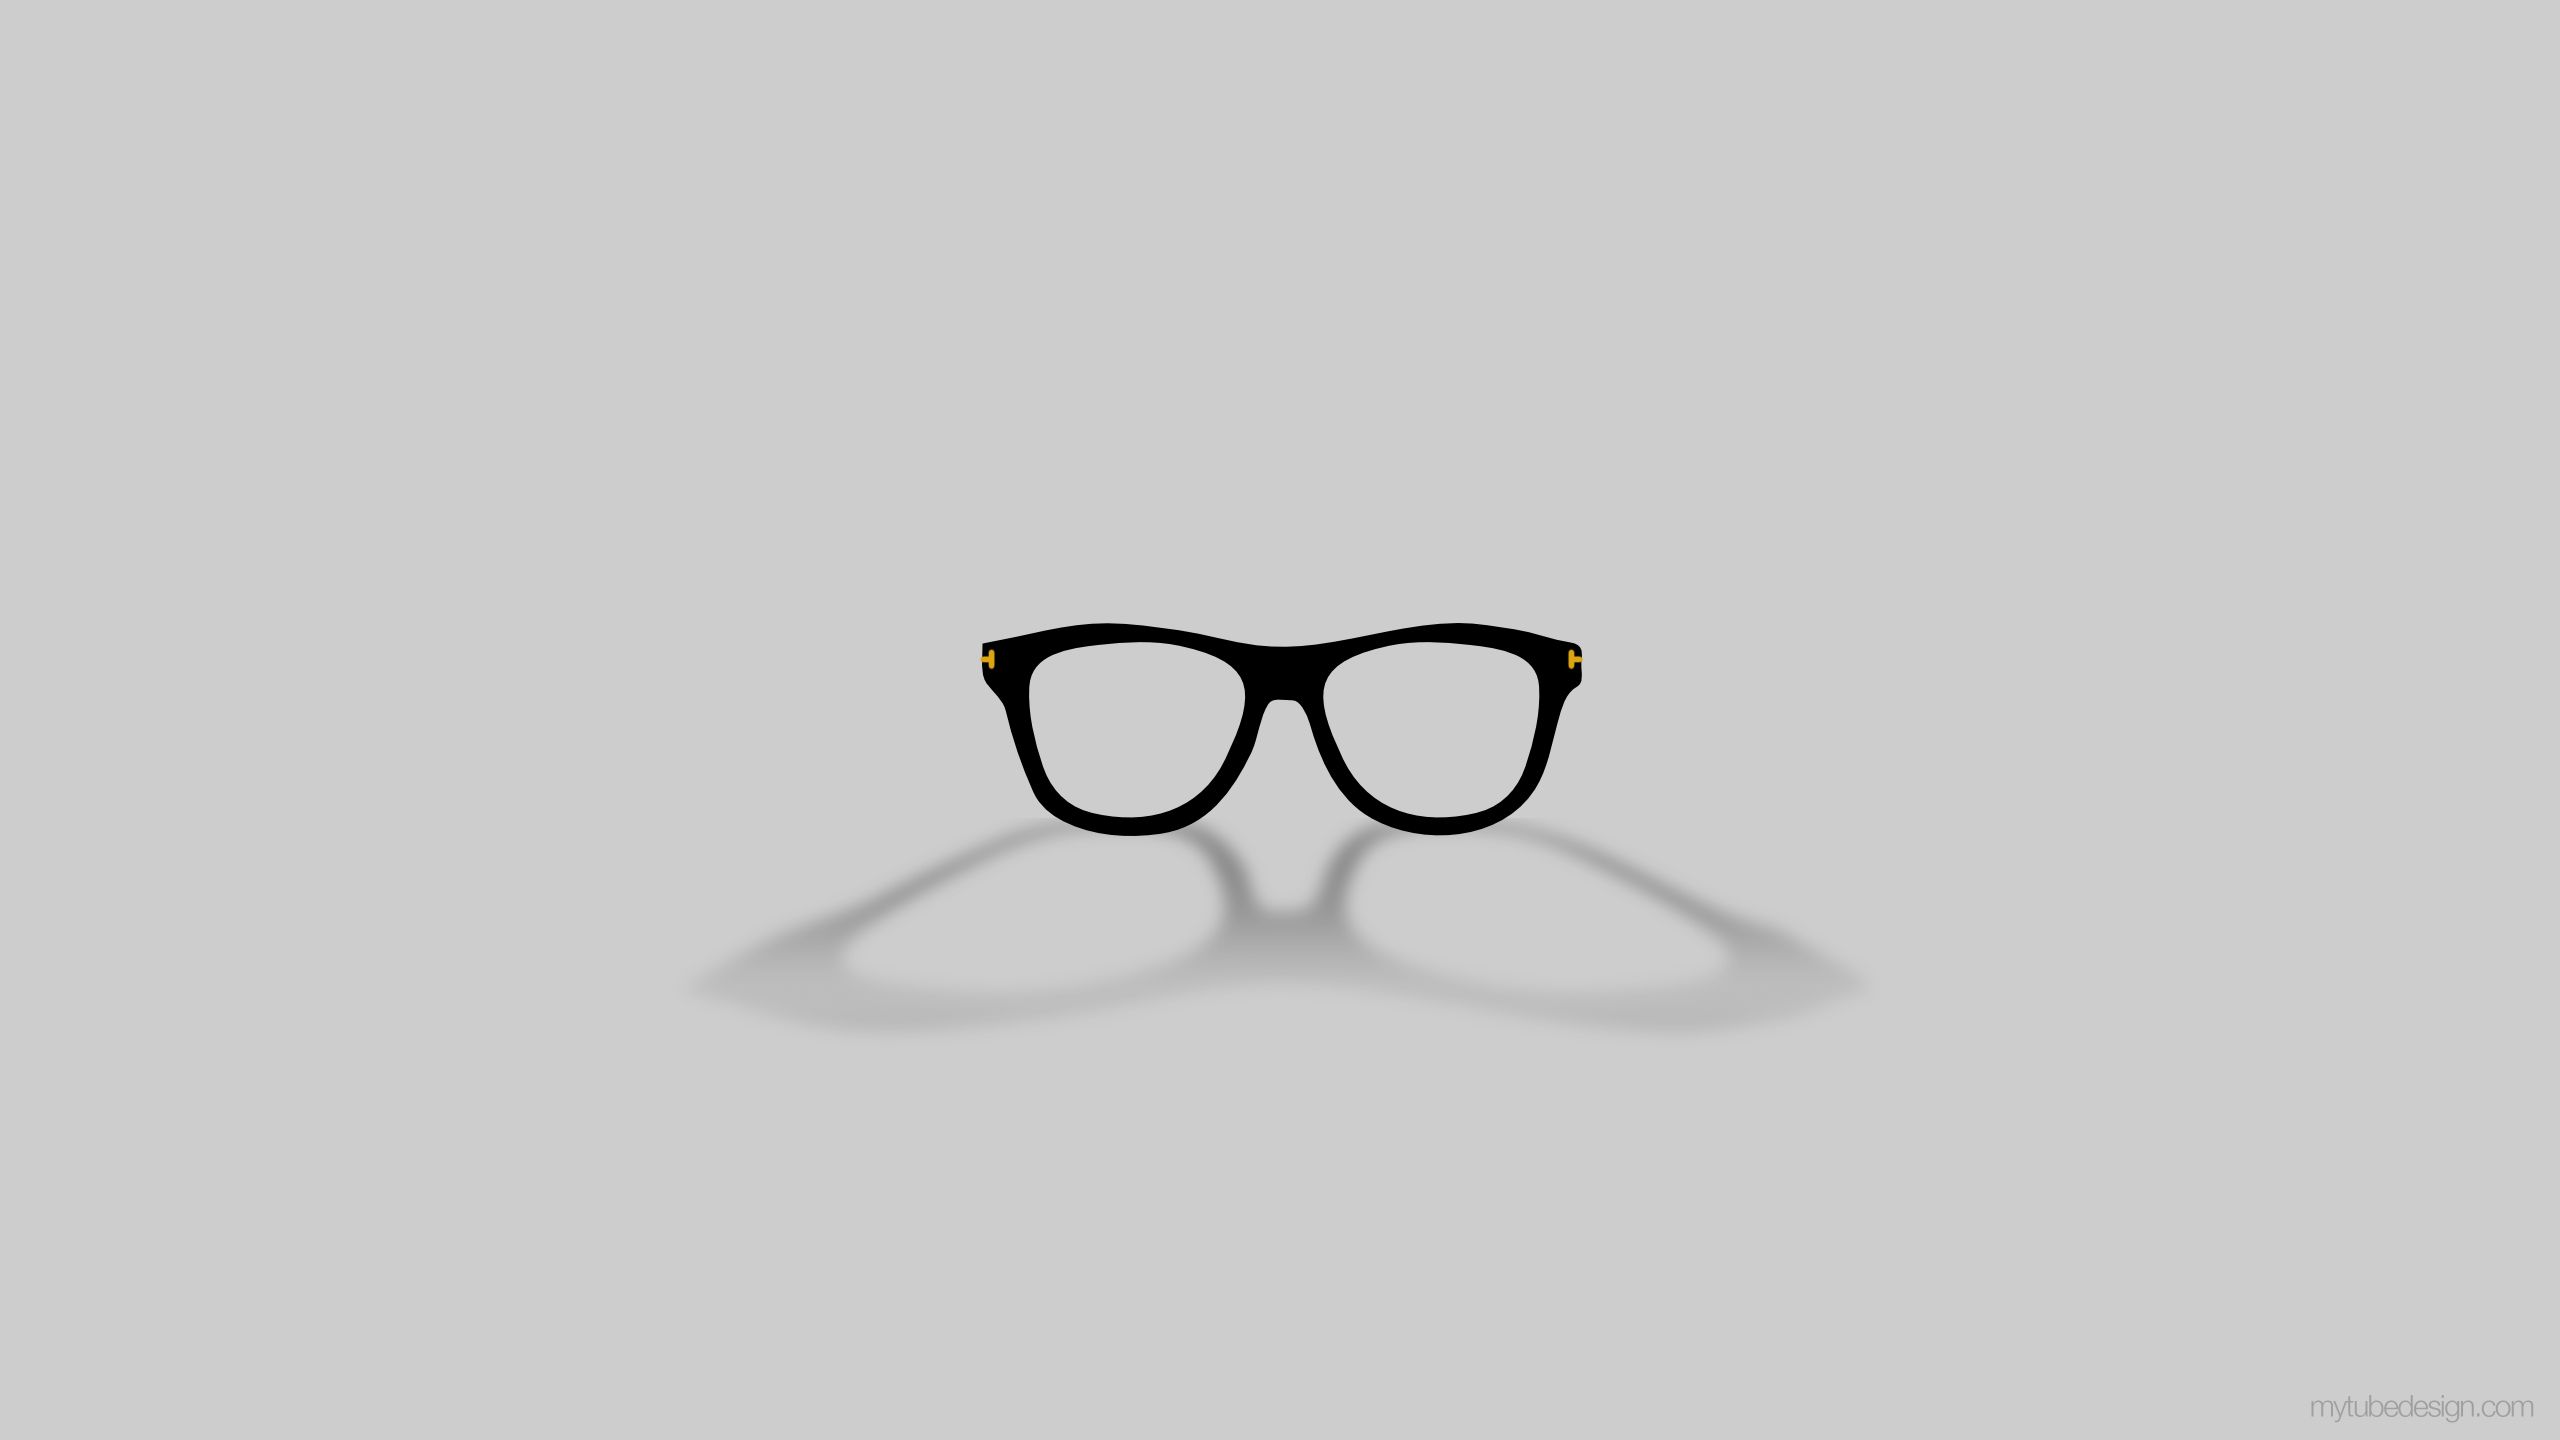 Tom Ford Glasses | MyTubeDesign Wallpapers | YouTube Facebook ...